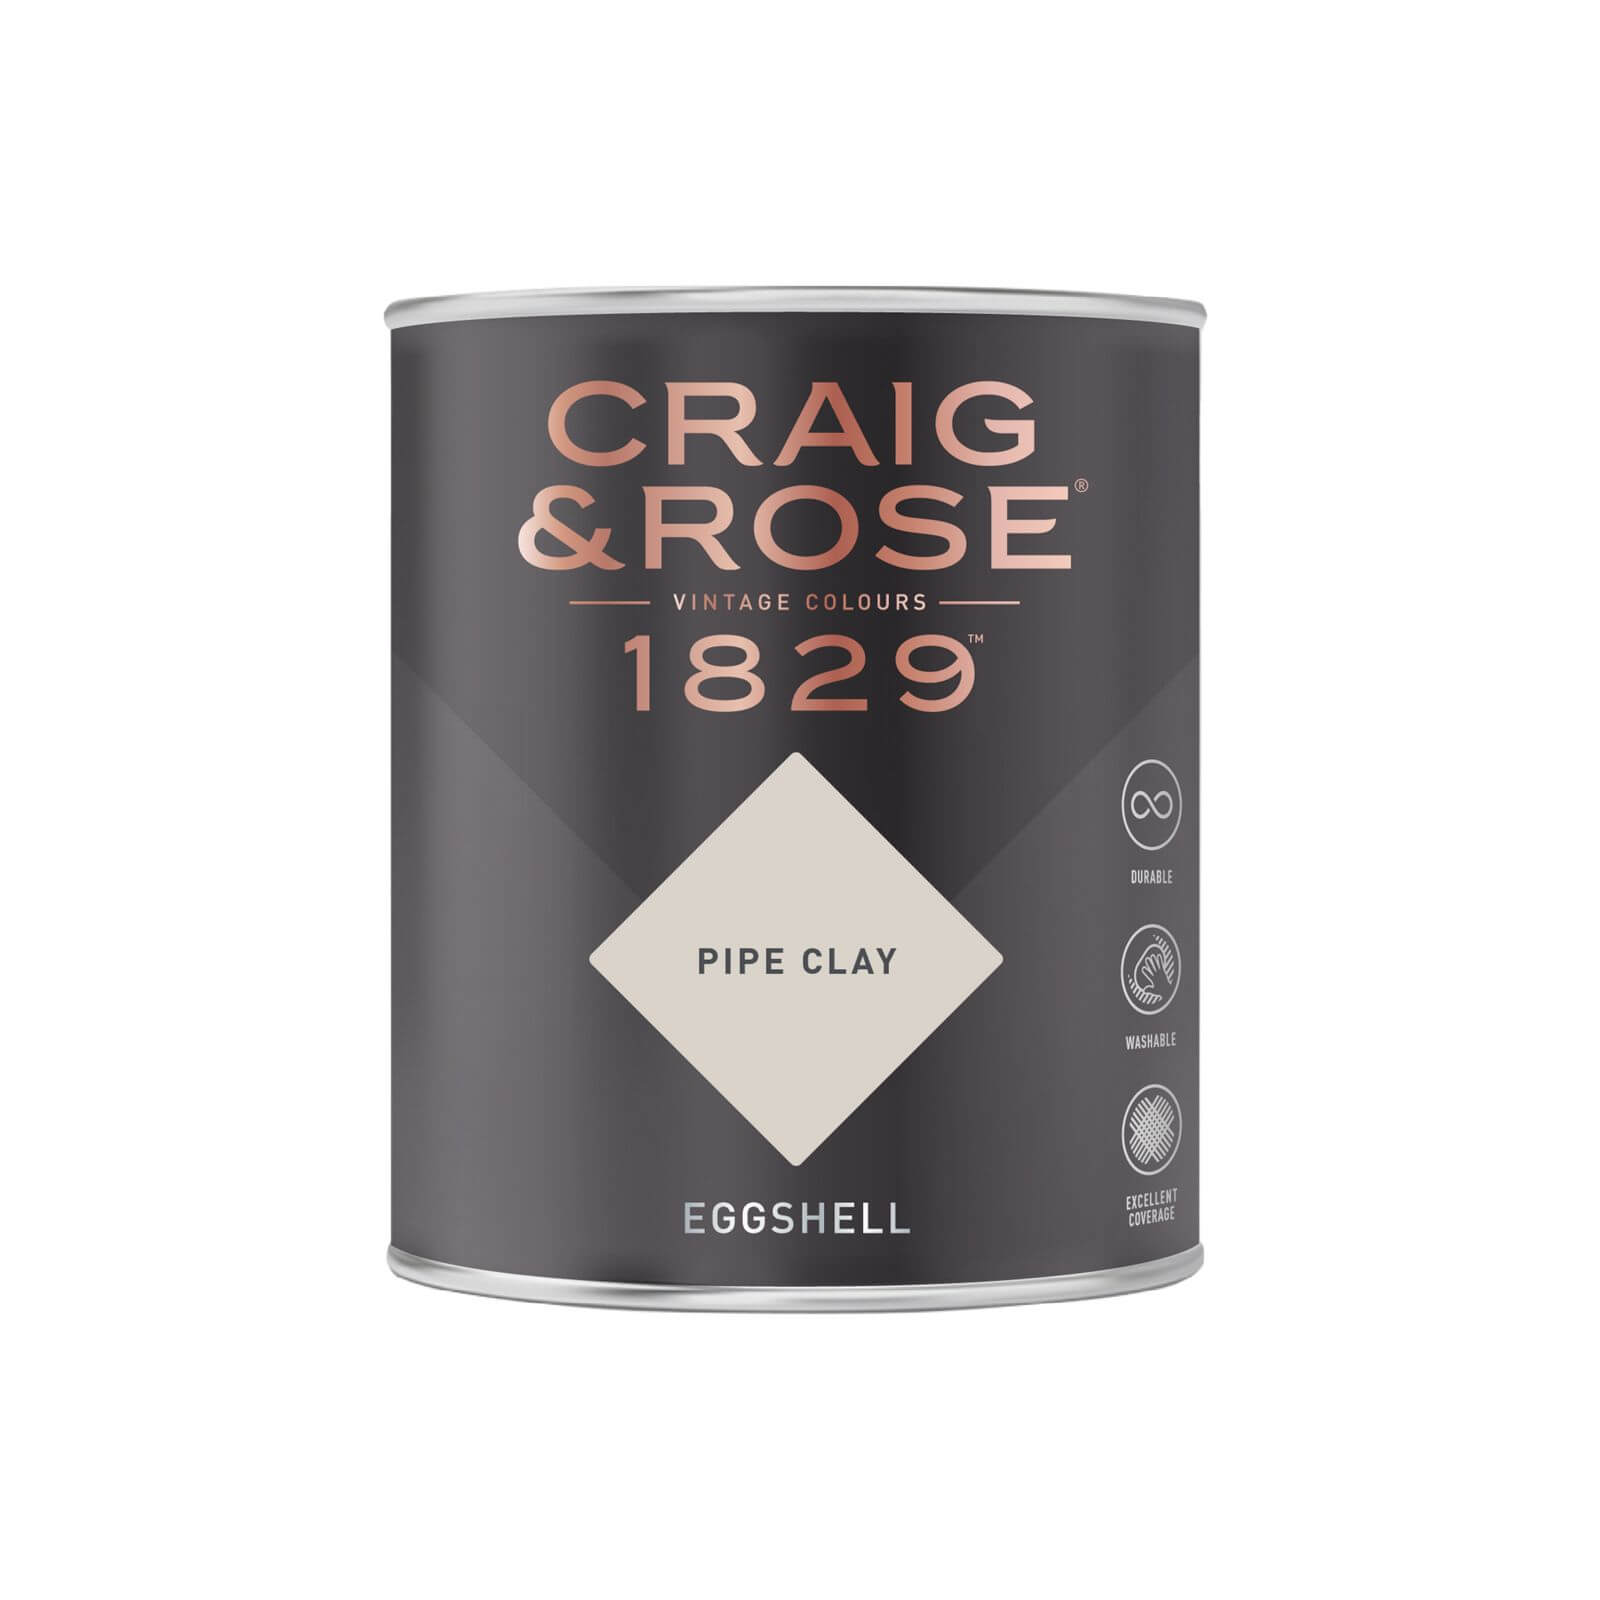 Craig & Rose 1829 Eggshell Paint Pipe Clay - 750ml